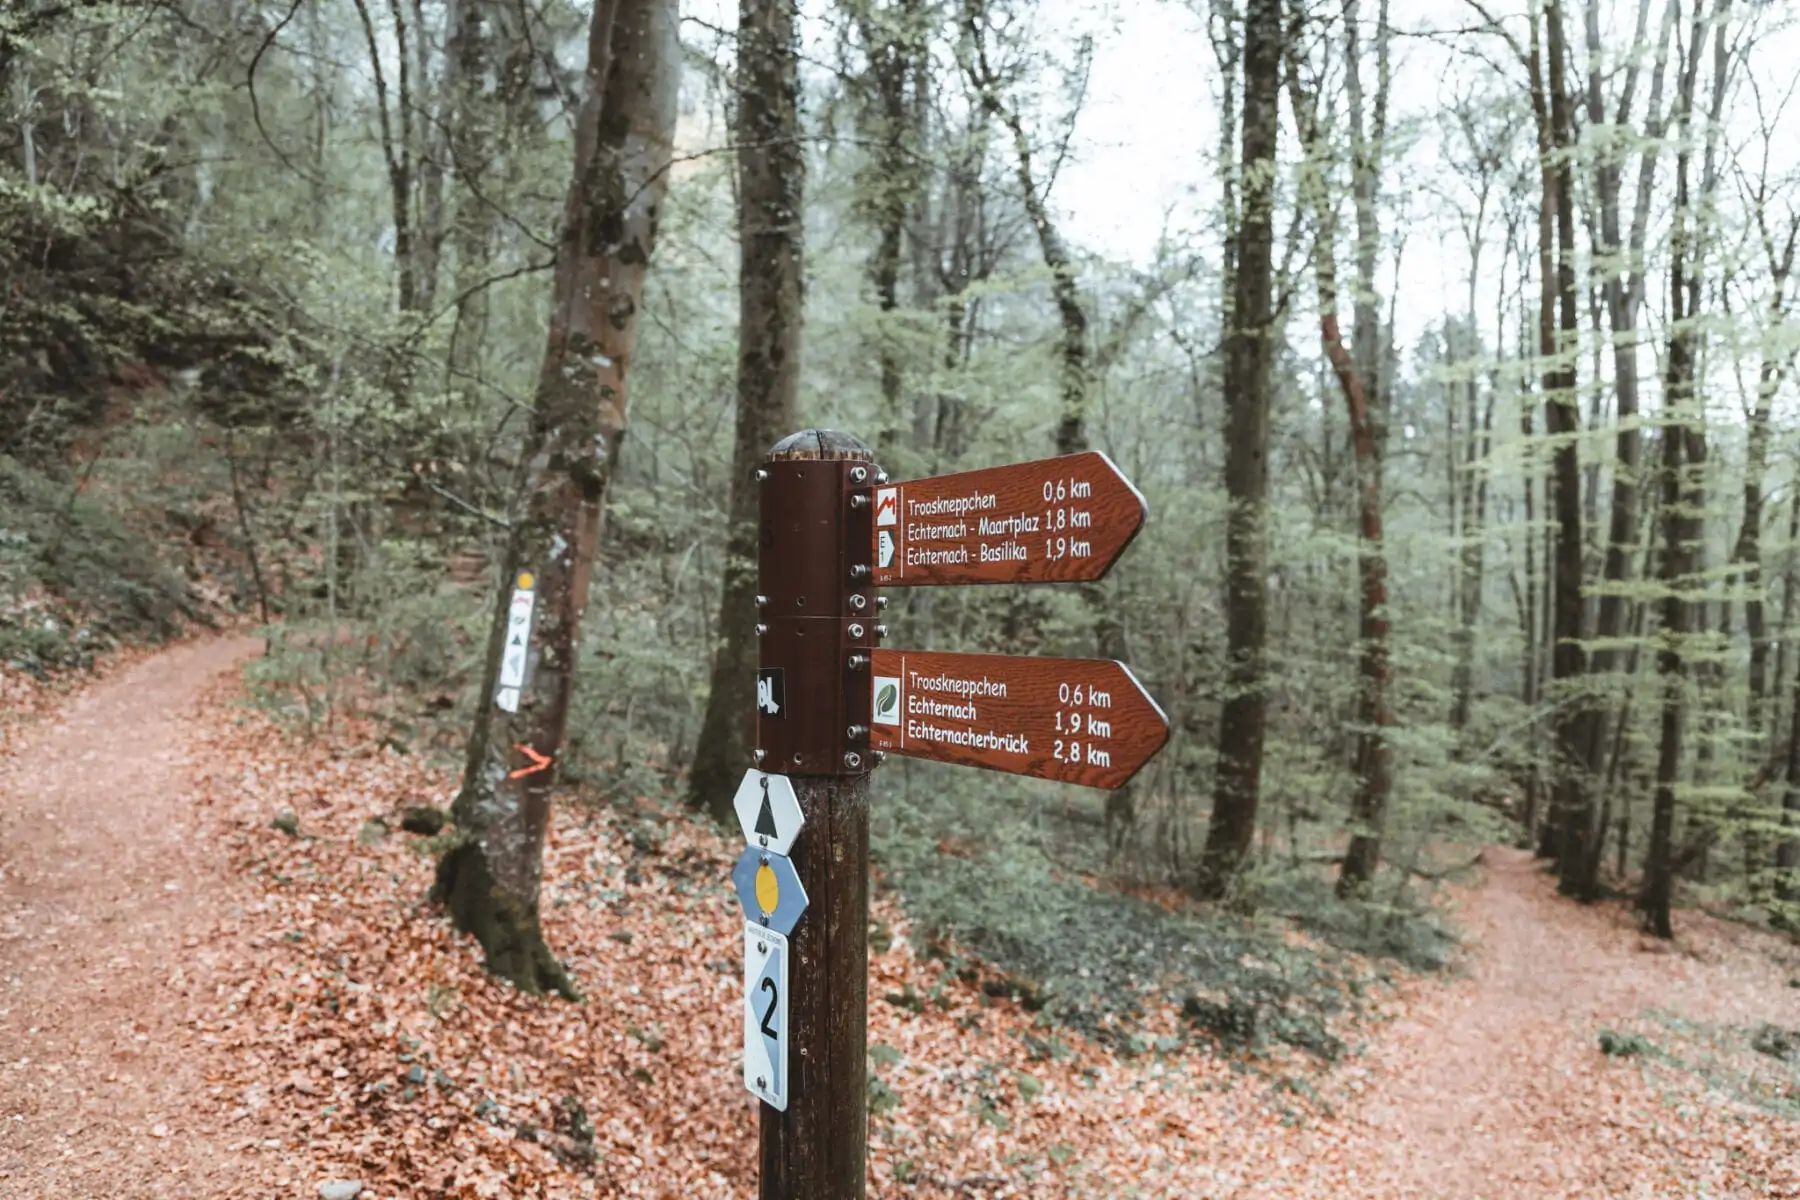 Mullerthal Trail bordjes waar vaak ook een camping staat aangegeven